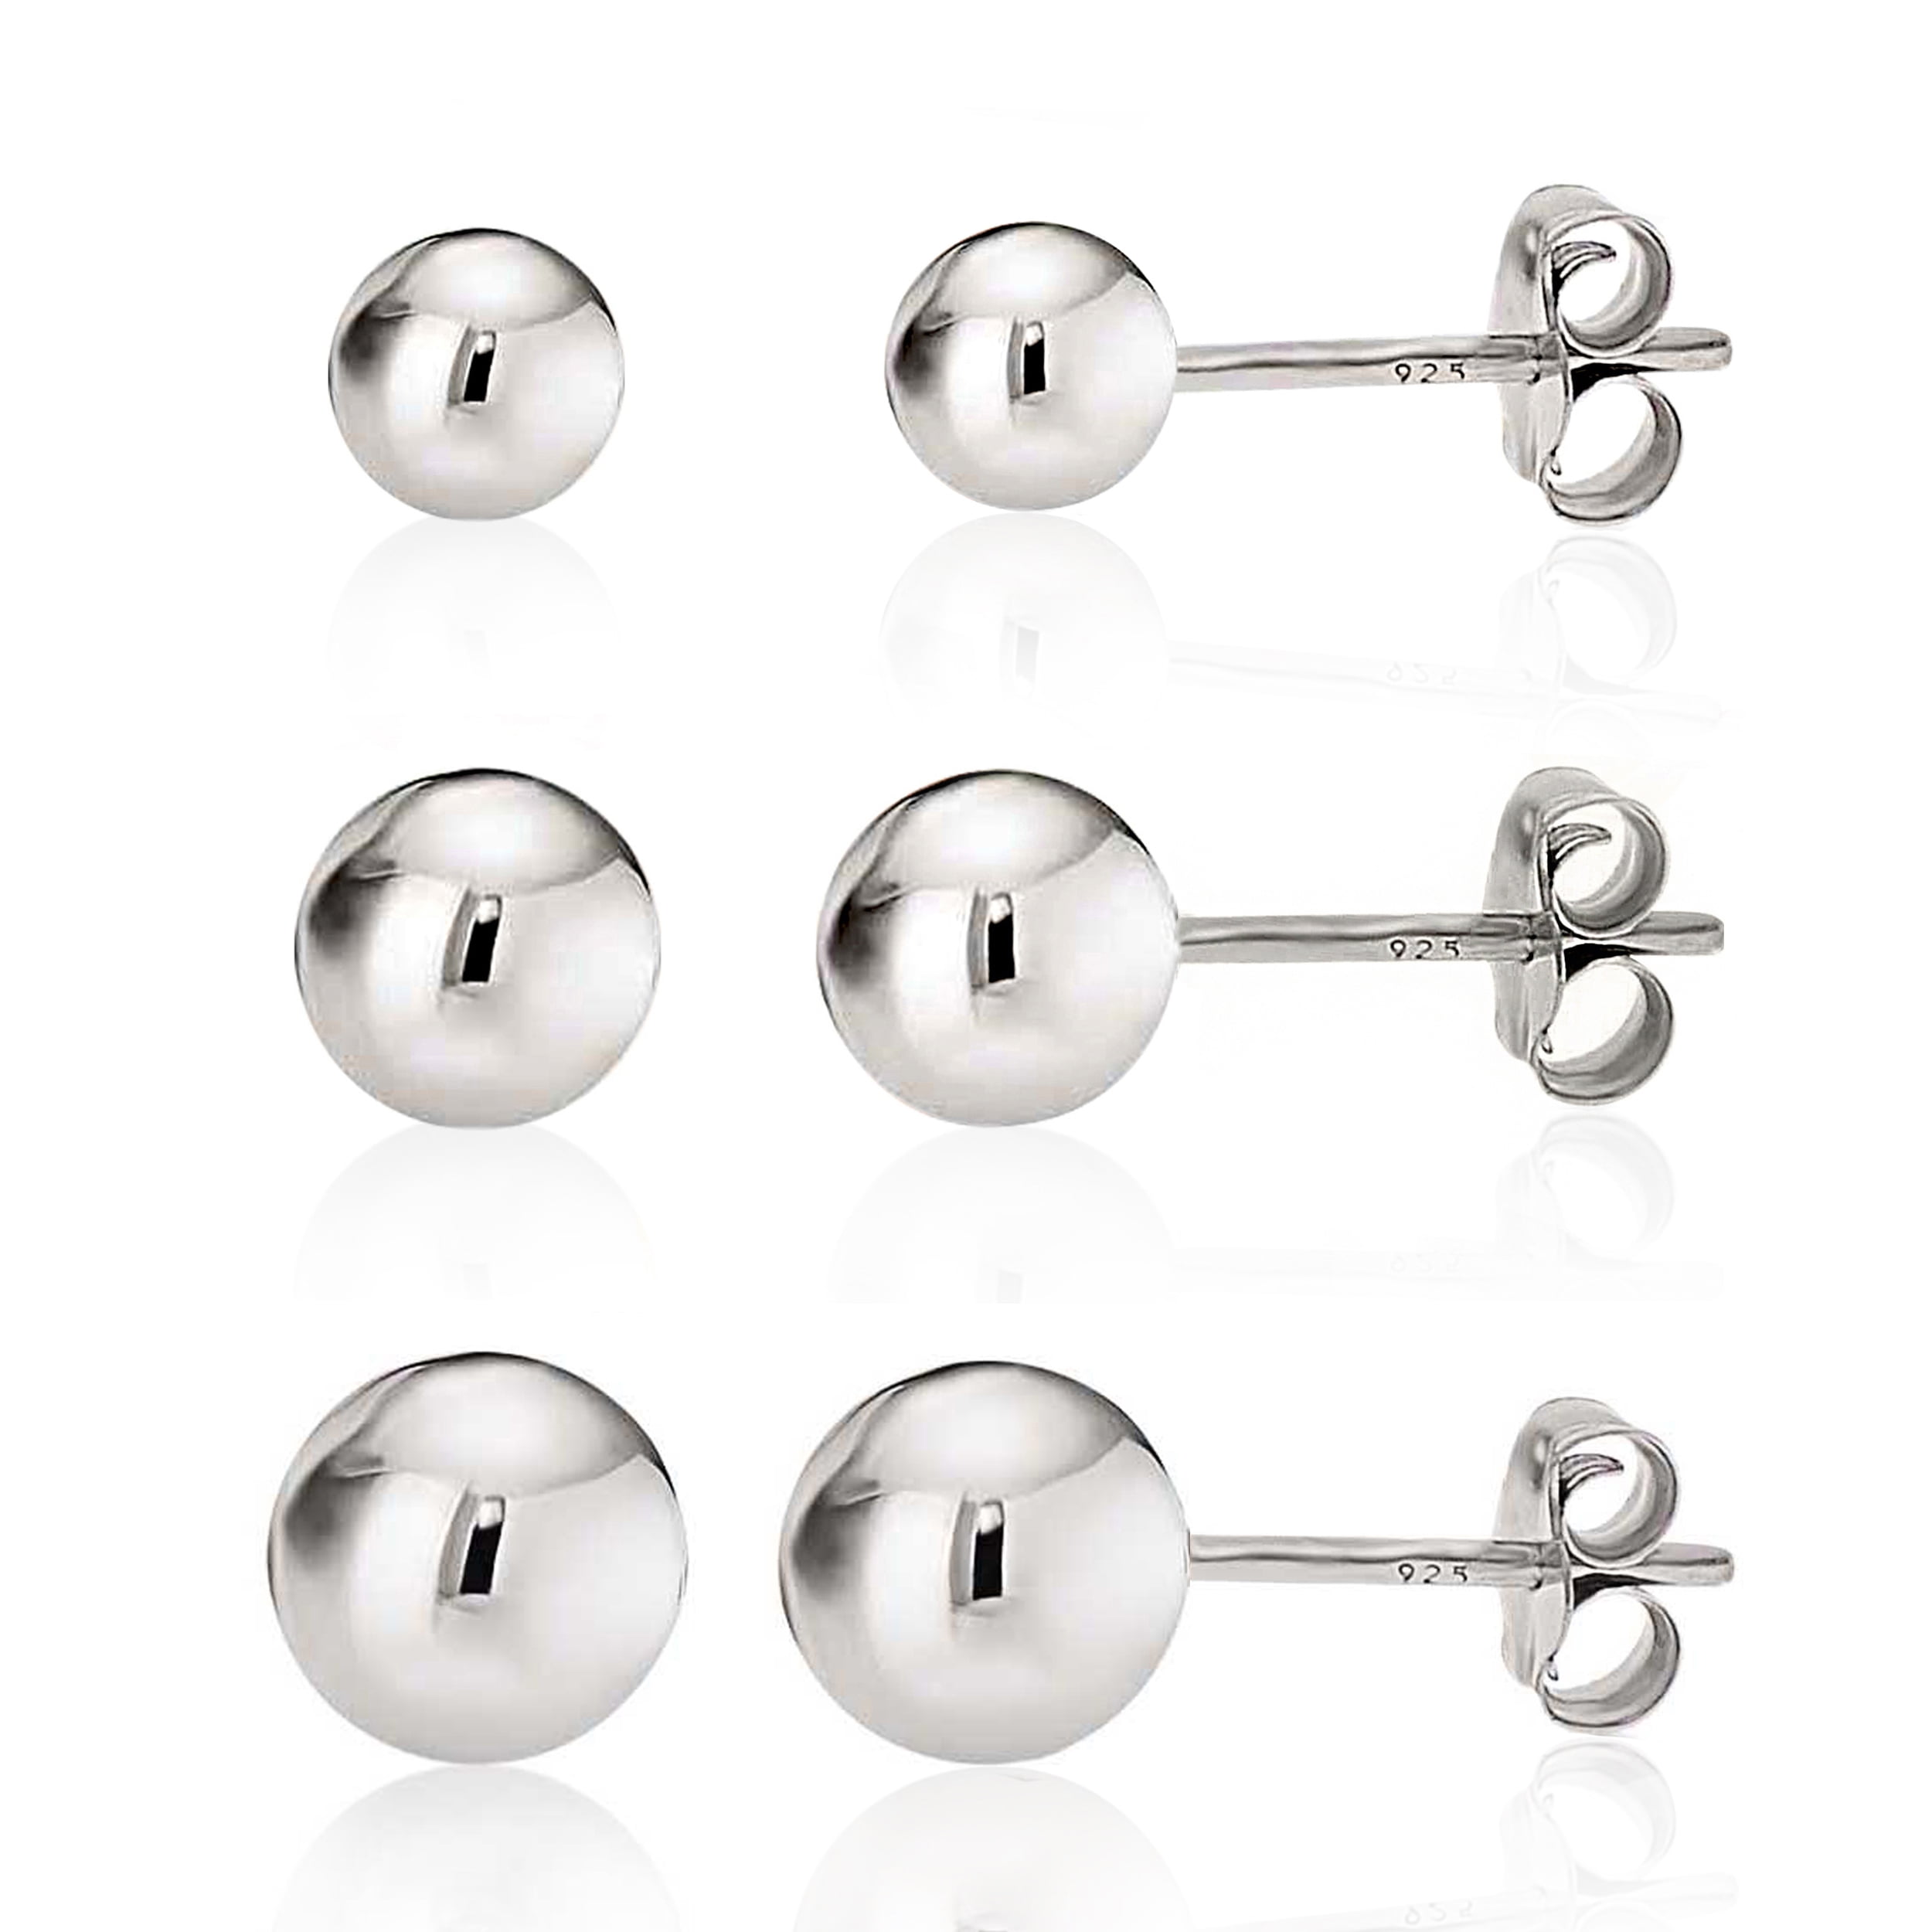 Solid 925 Sterling Silver Plain Earrings Stylish High Polished Earrings